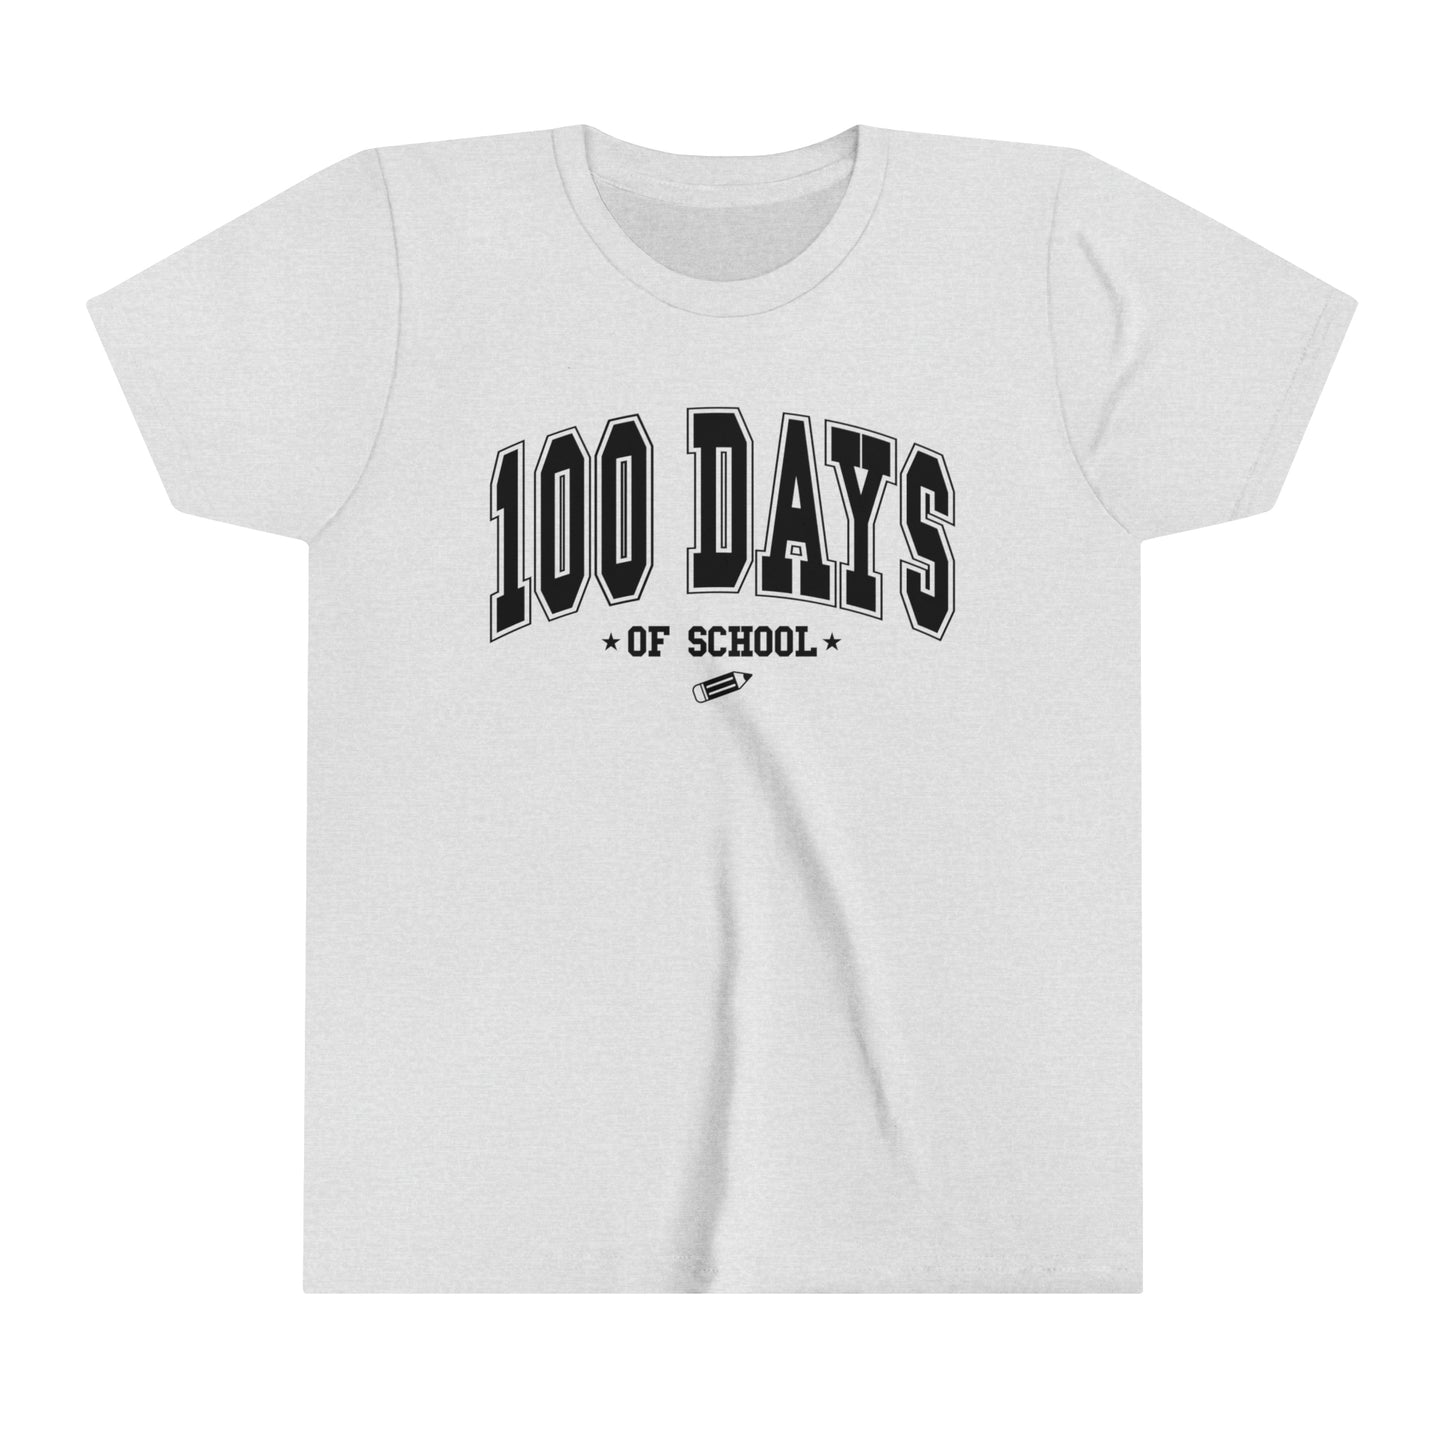 100 Days of School Boy's and Girl's Unisex Short Sleeve Tee